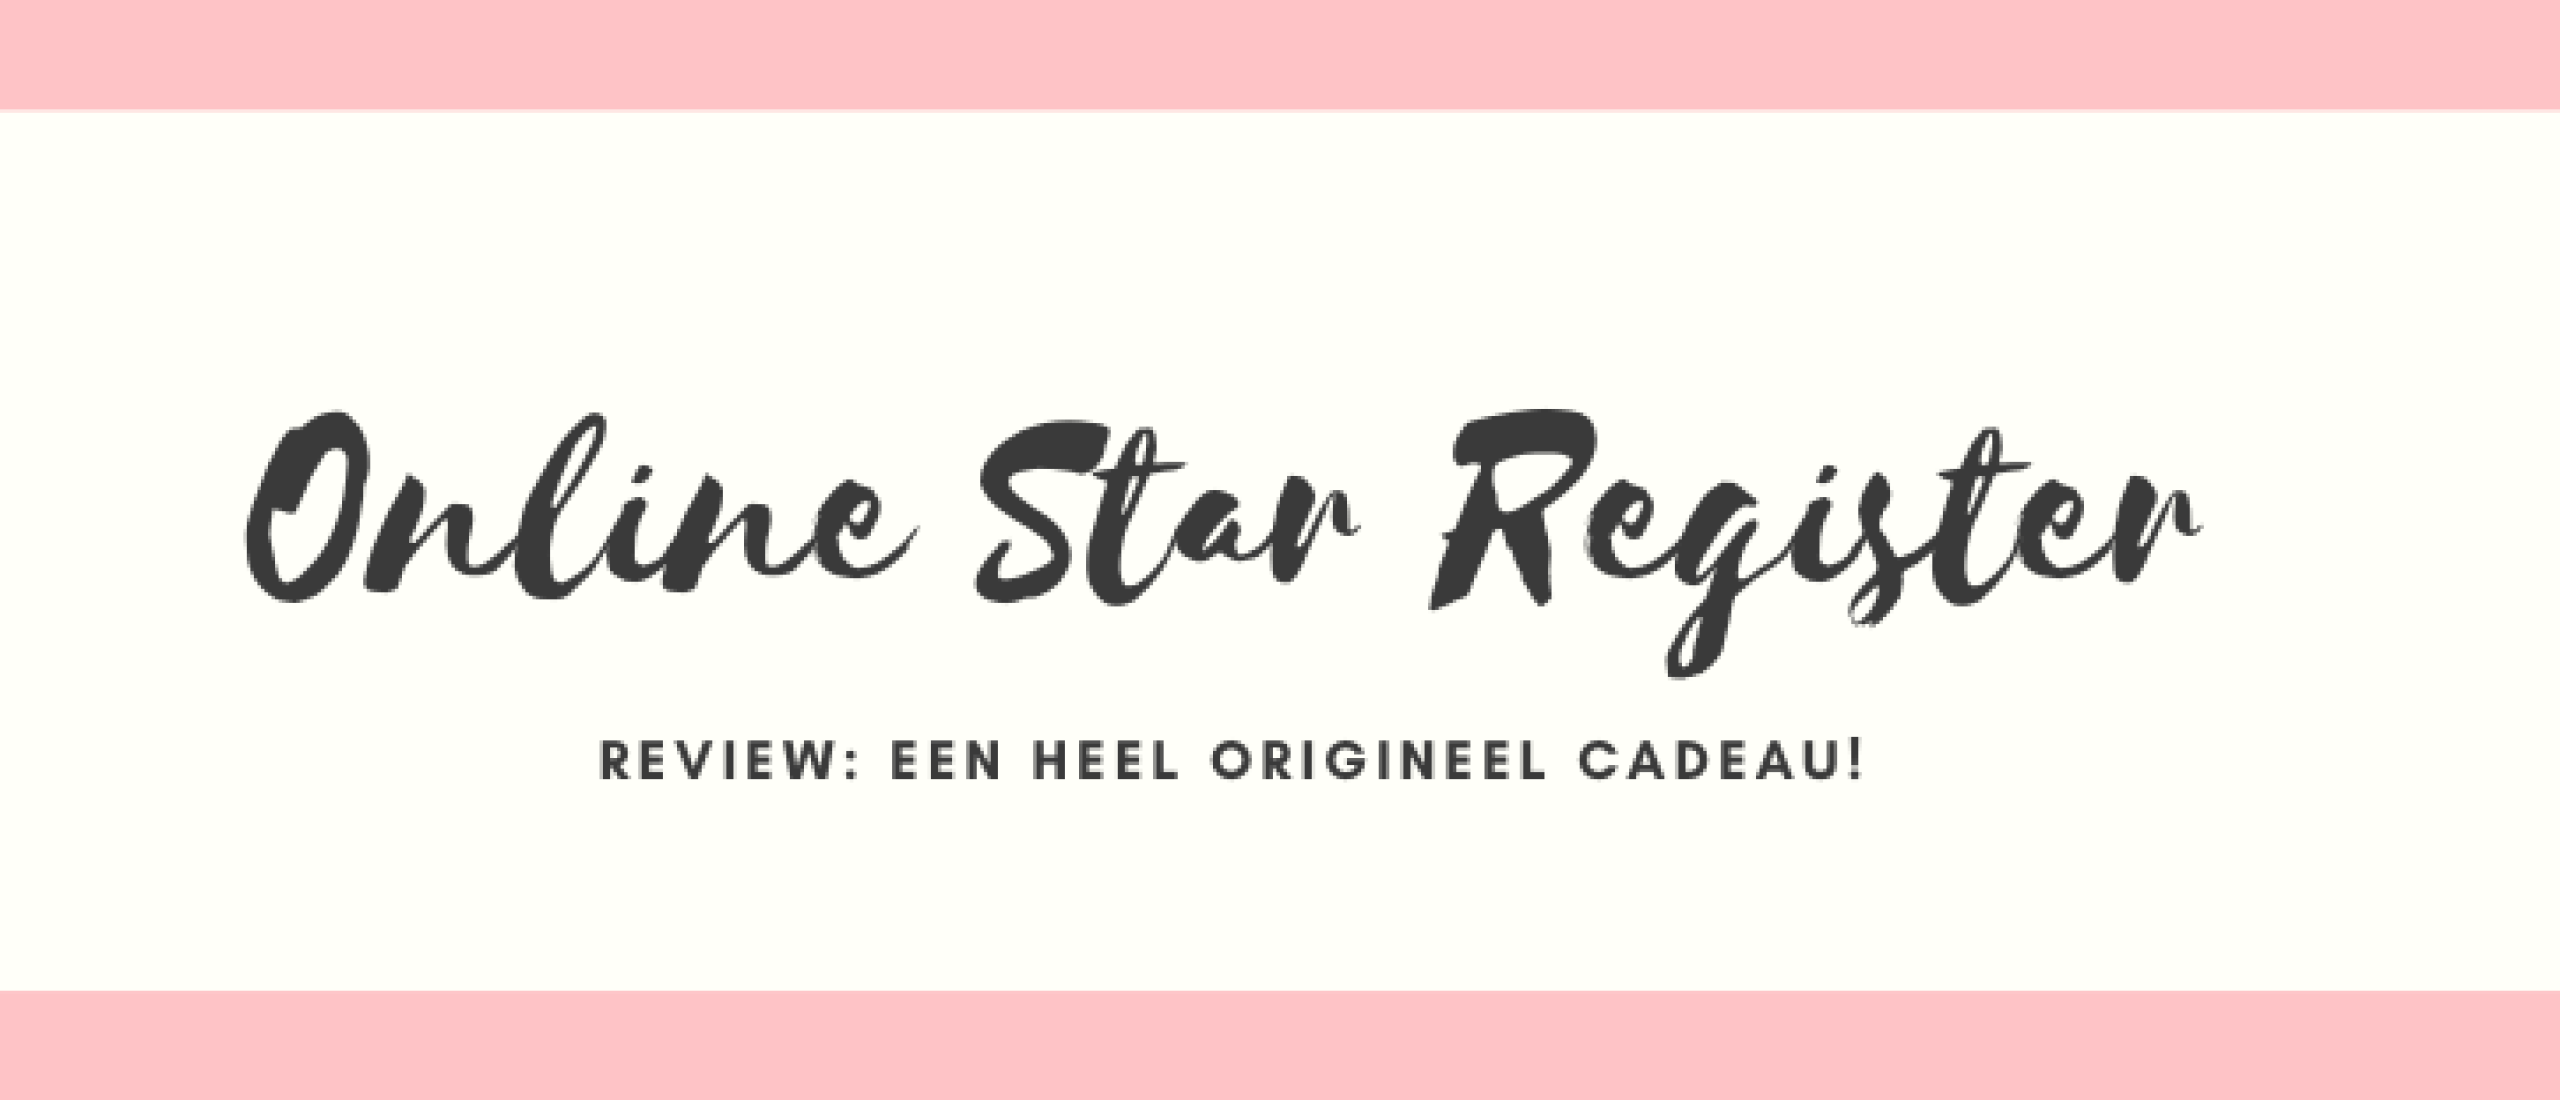 Online Star Register Review: Origineel Cadeau!